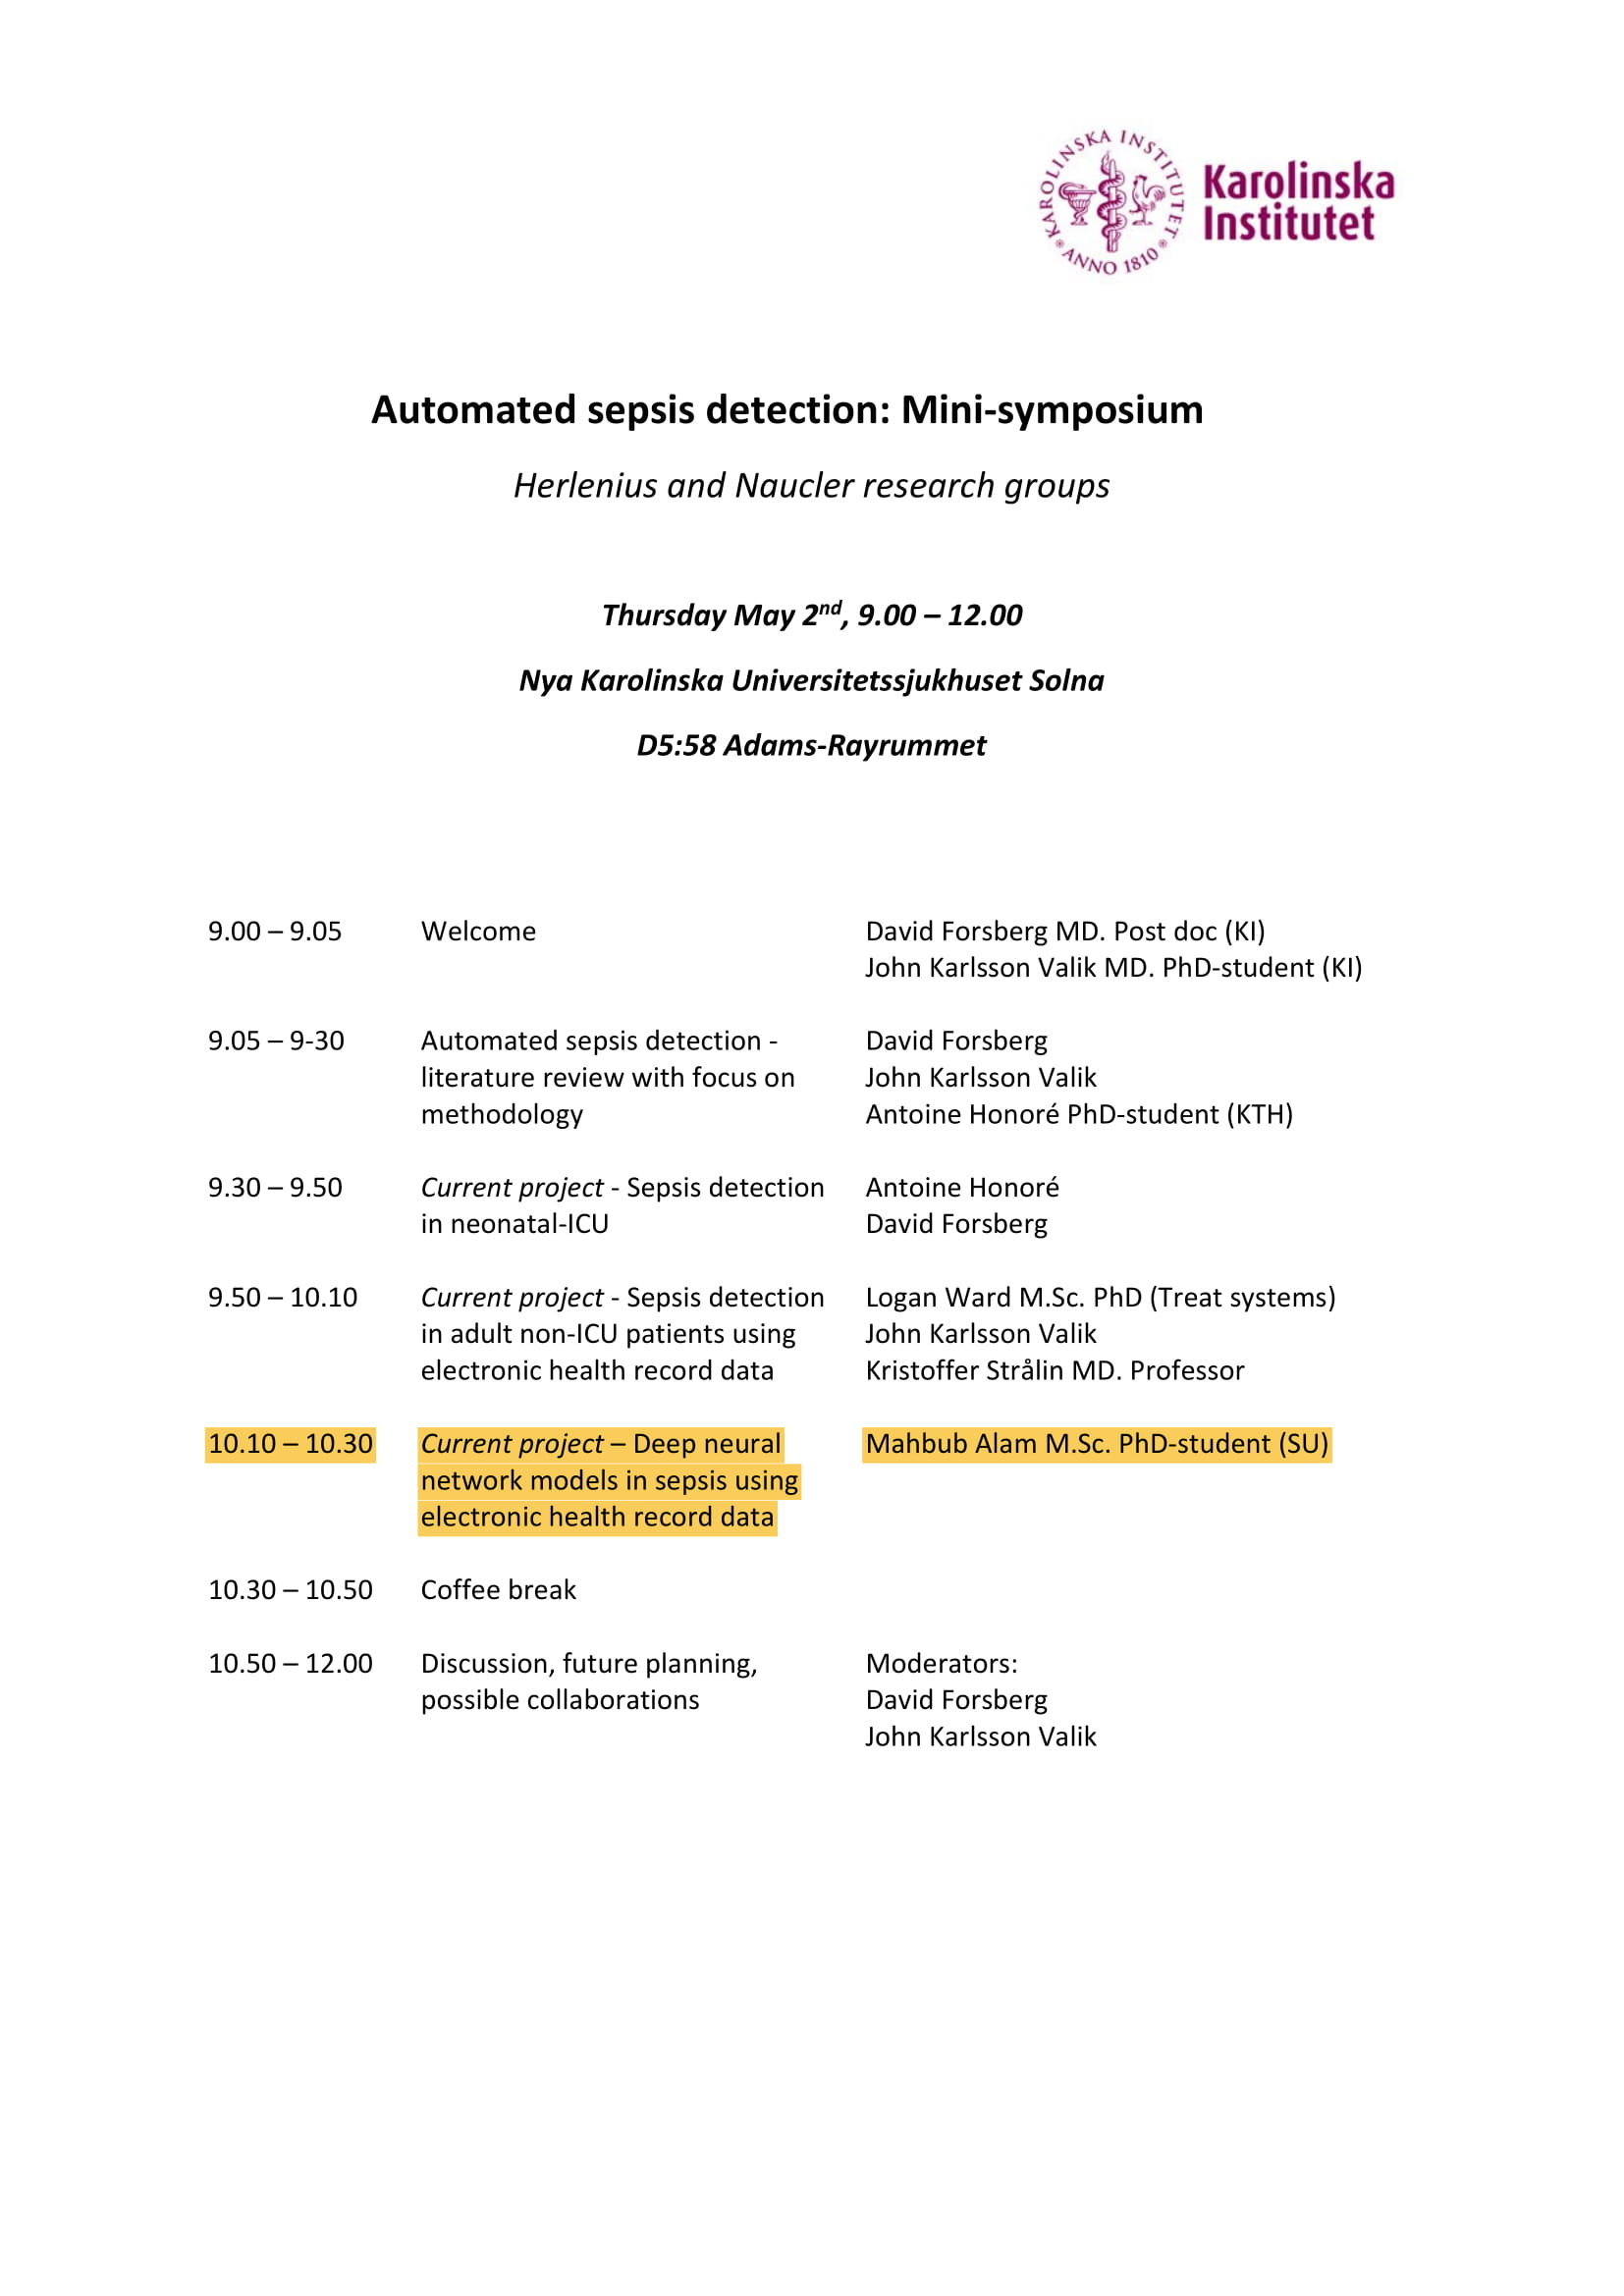 Infection detection - mini symposium